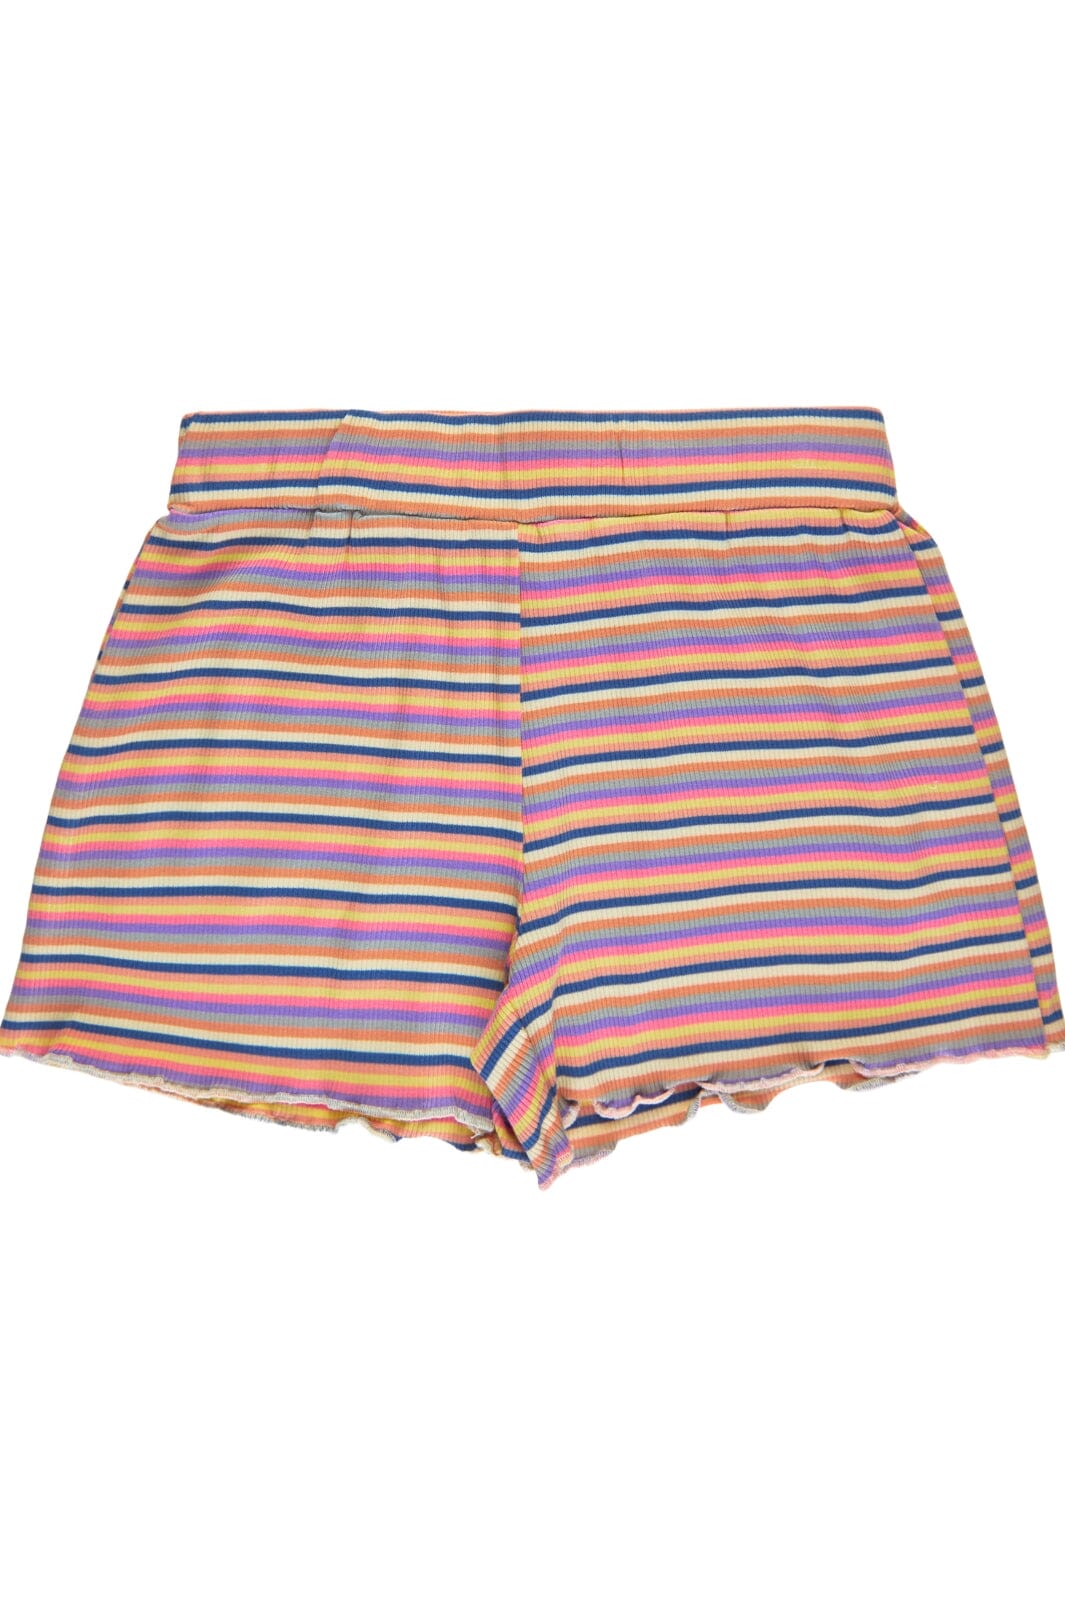 The New - Tngola Rib Shorts - Multi Stripe Shorts 